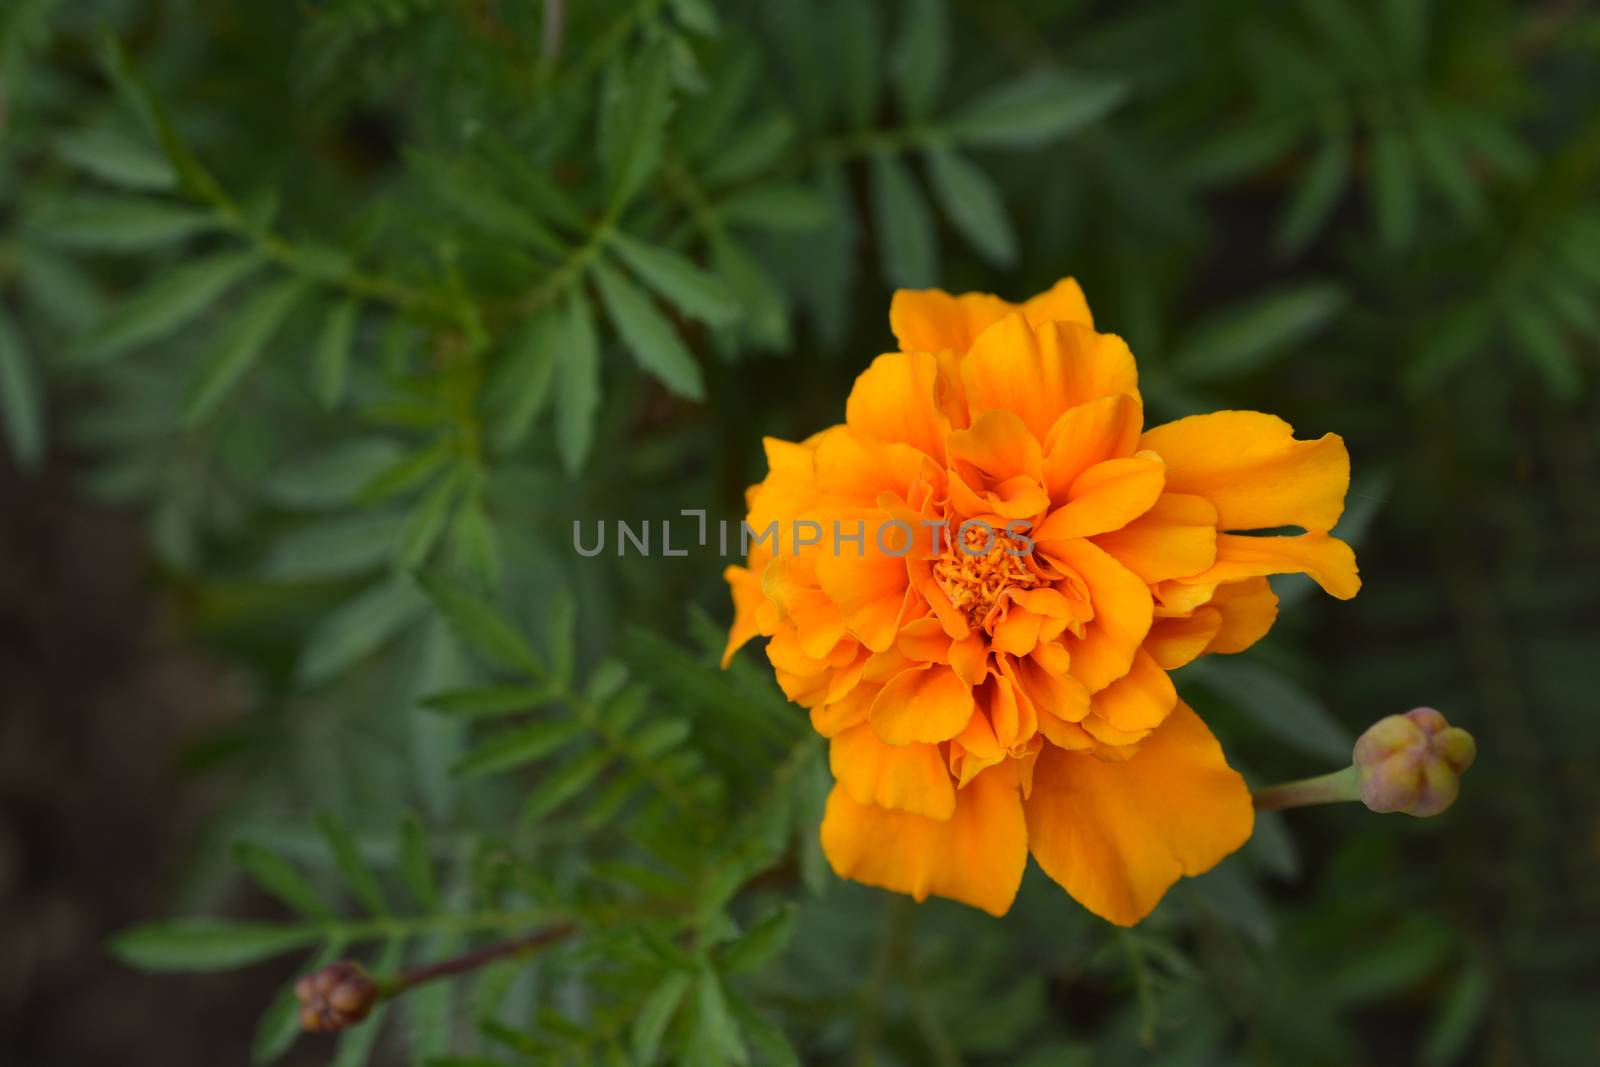 French marigold - Latin name - Tagetes patula